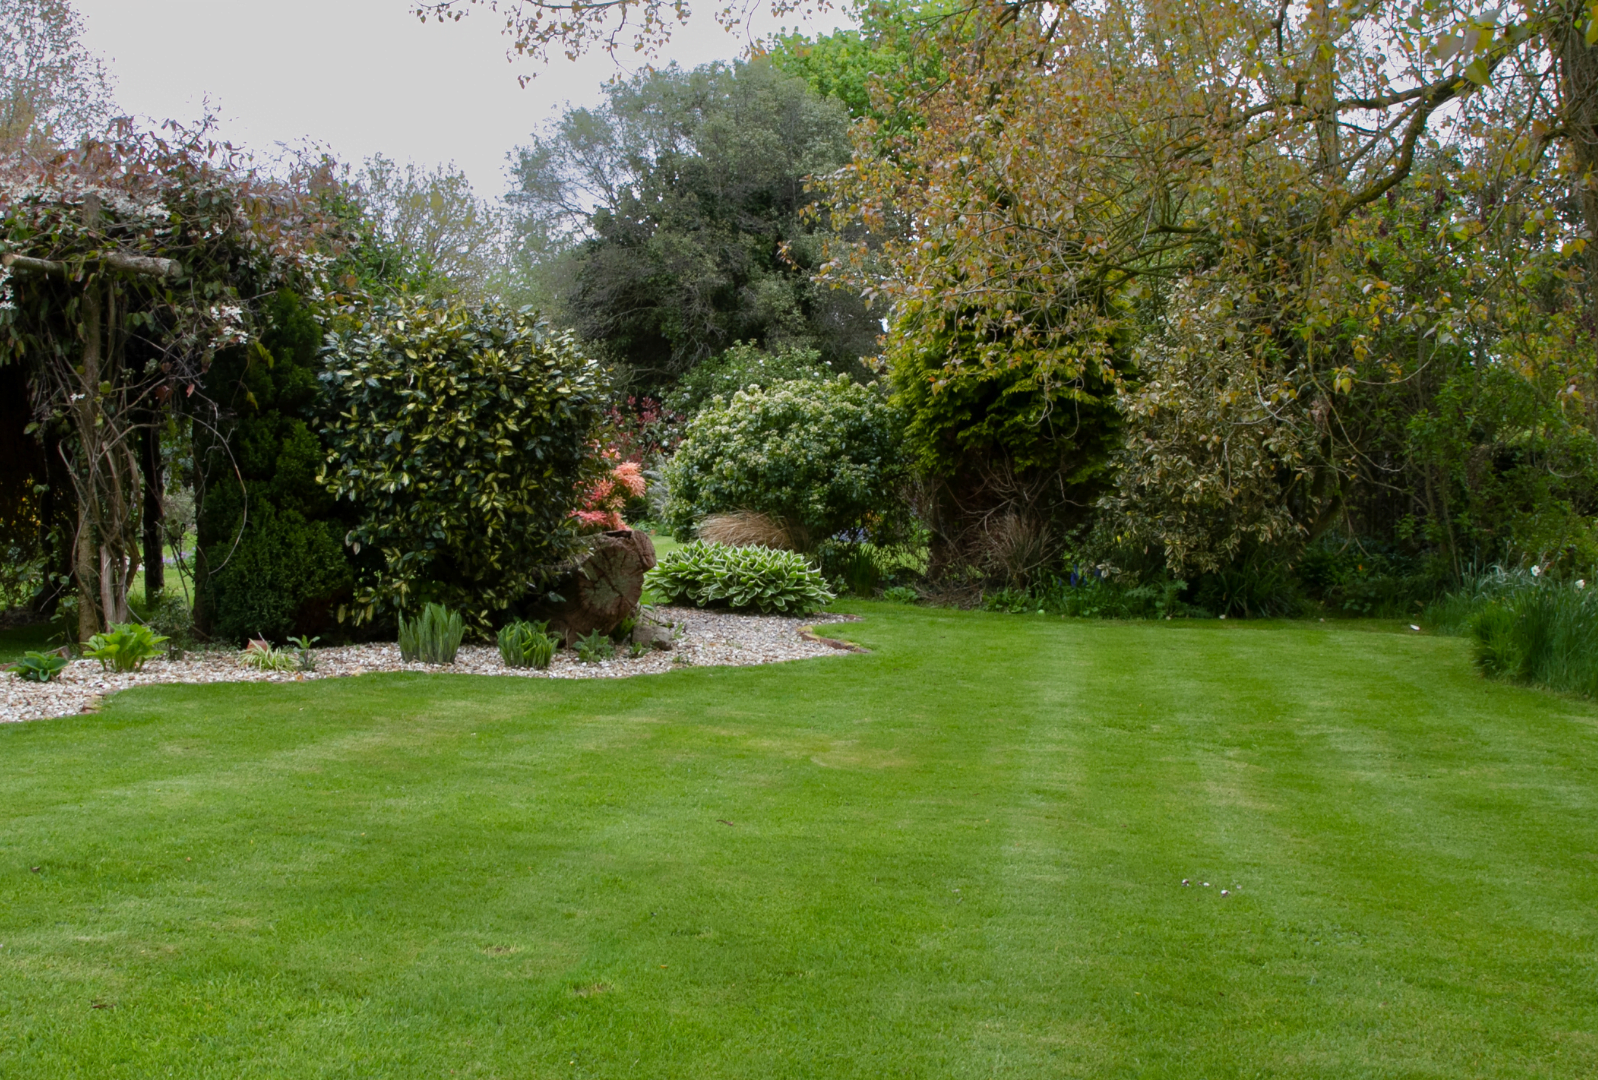 Image of the lawn at Ashridge